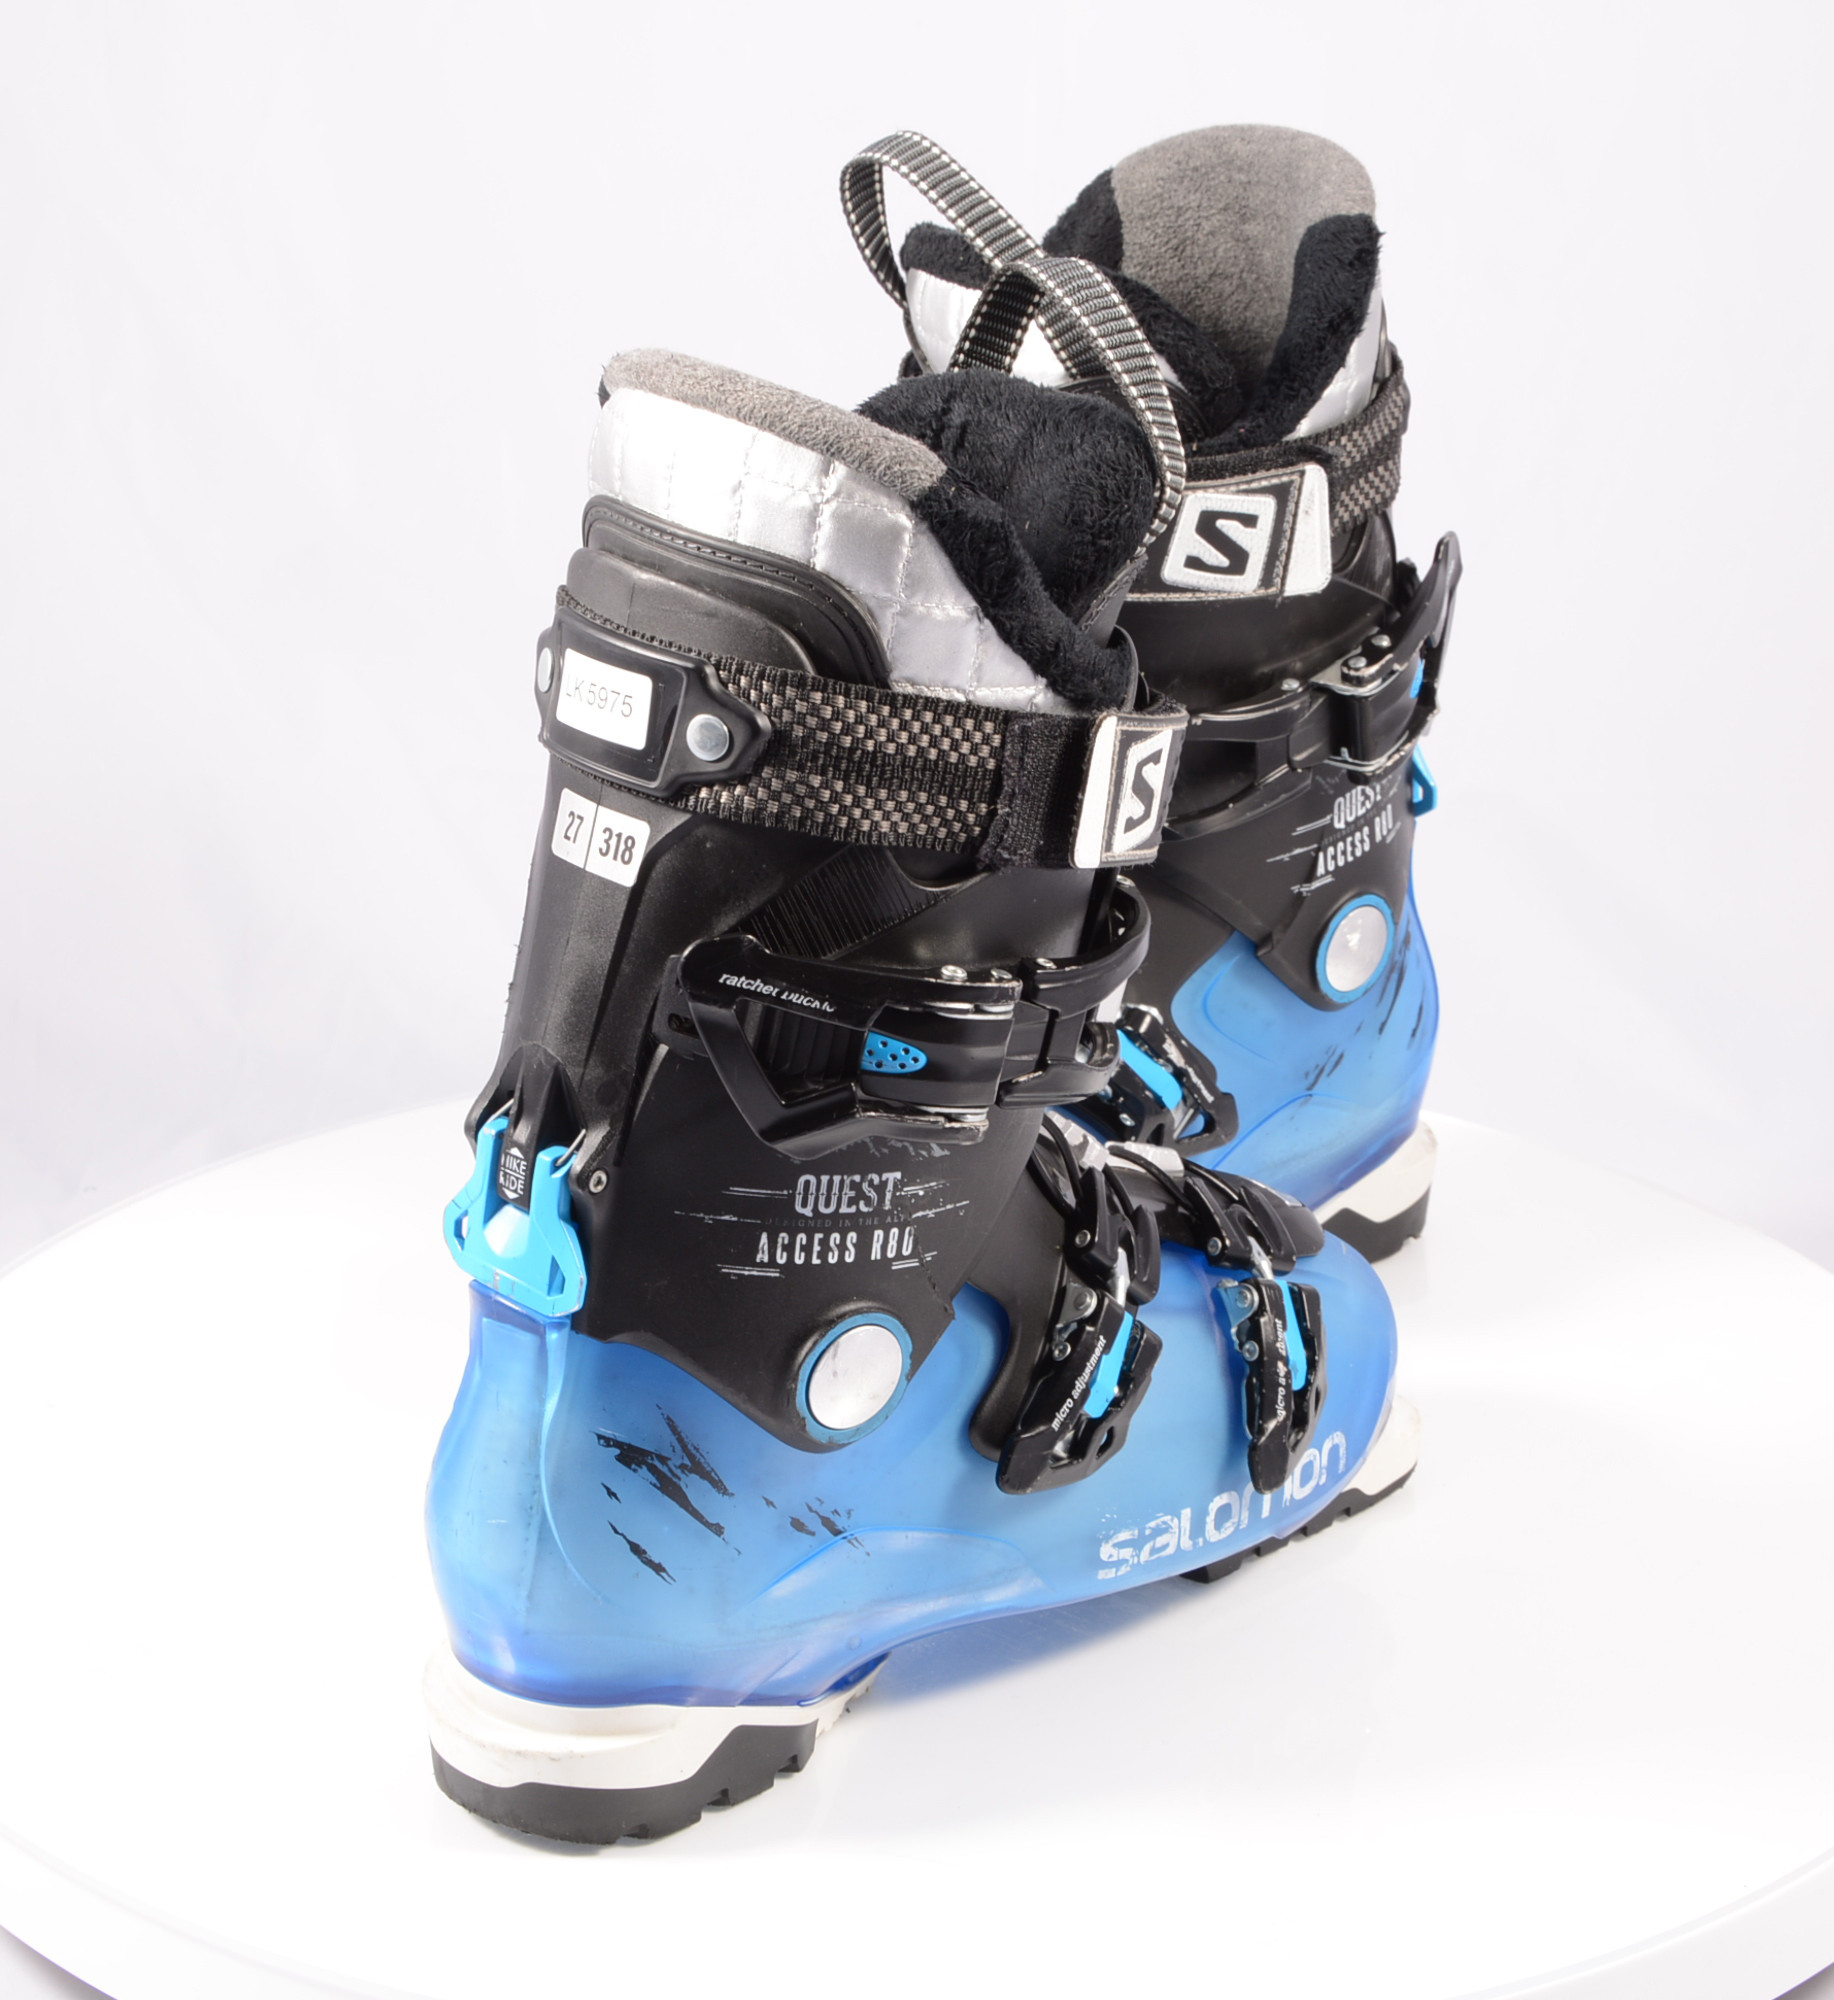 ski boots SALOMON QUEST ACCESS BLUE/black, SKI/WALK mode, micro, RATCHET buckle ( TOP condition ) - Mardosport.com